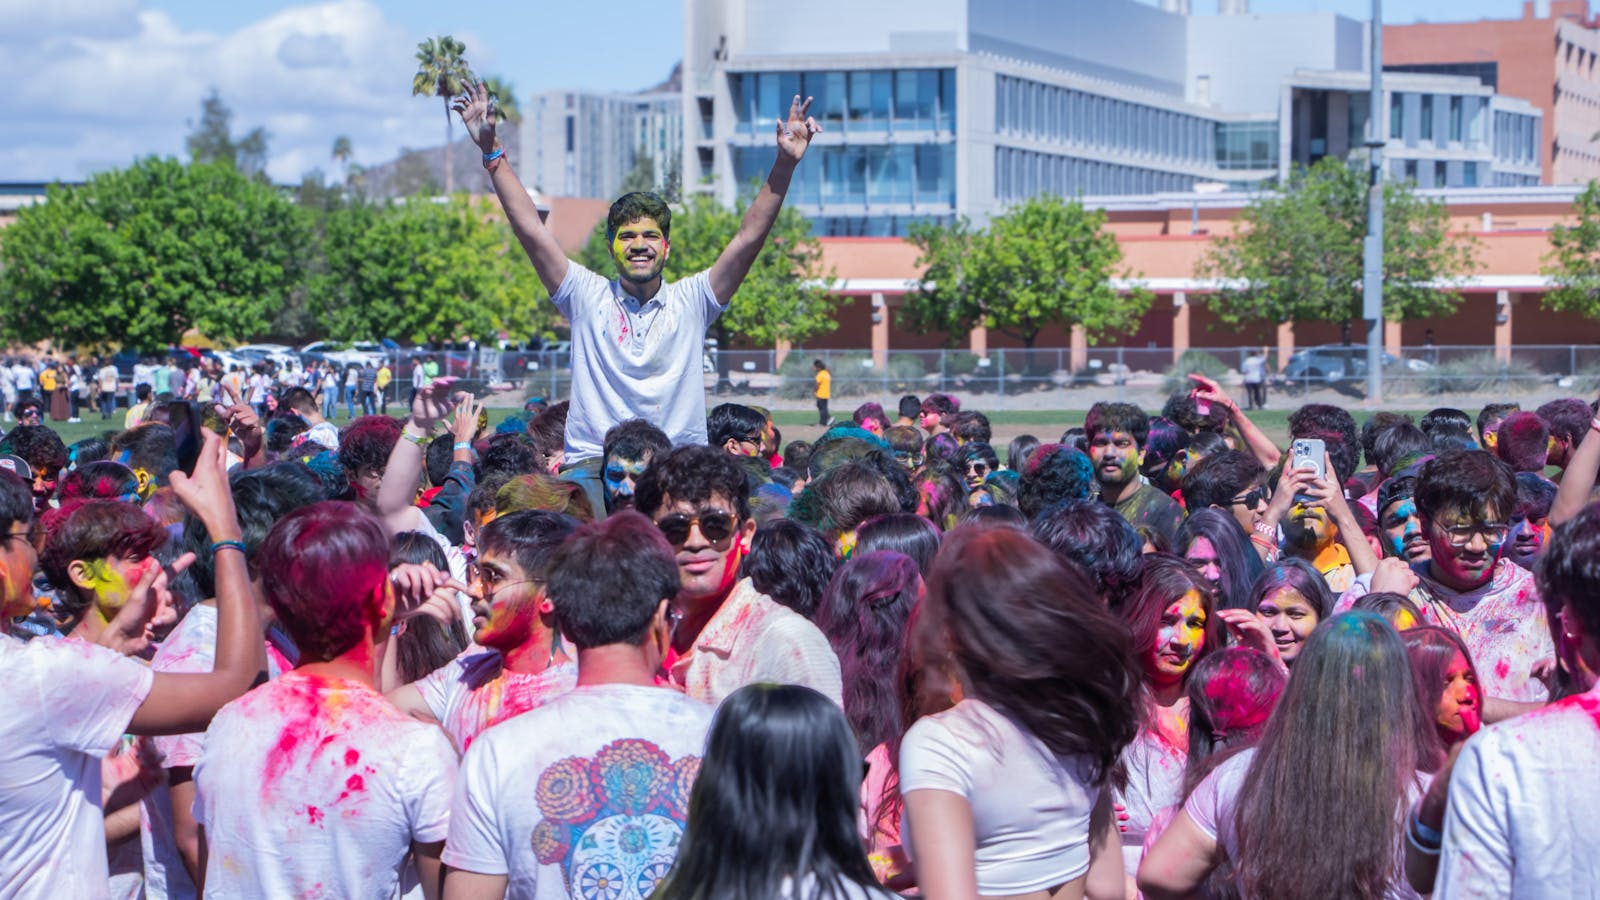 Video: ASU students come together, celebrate Holi